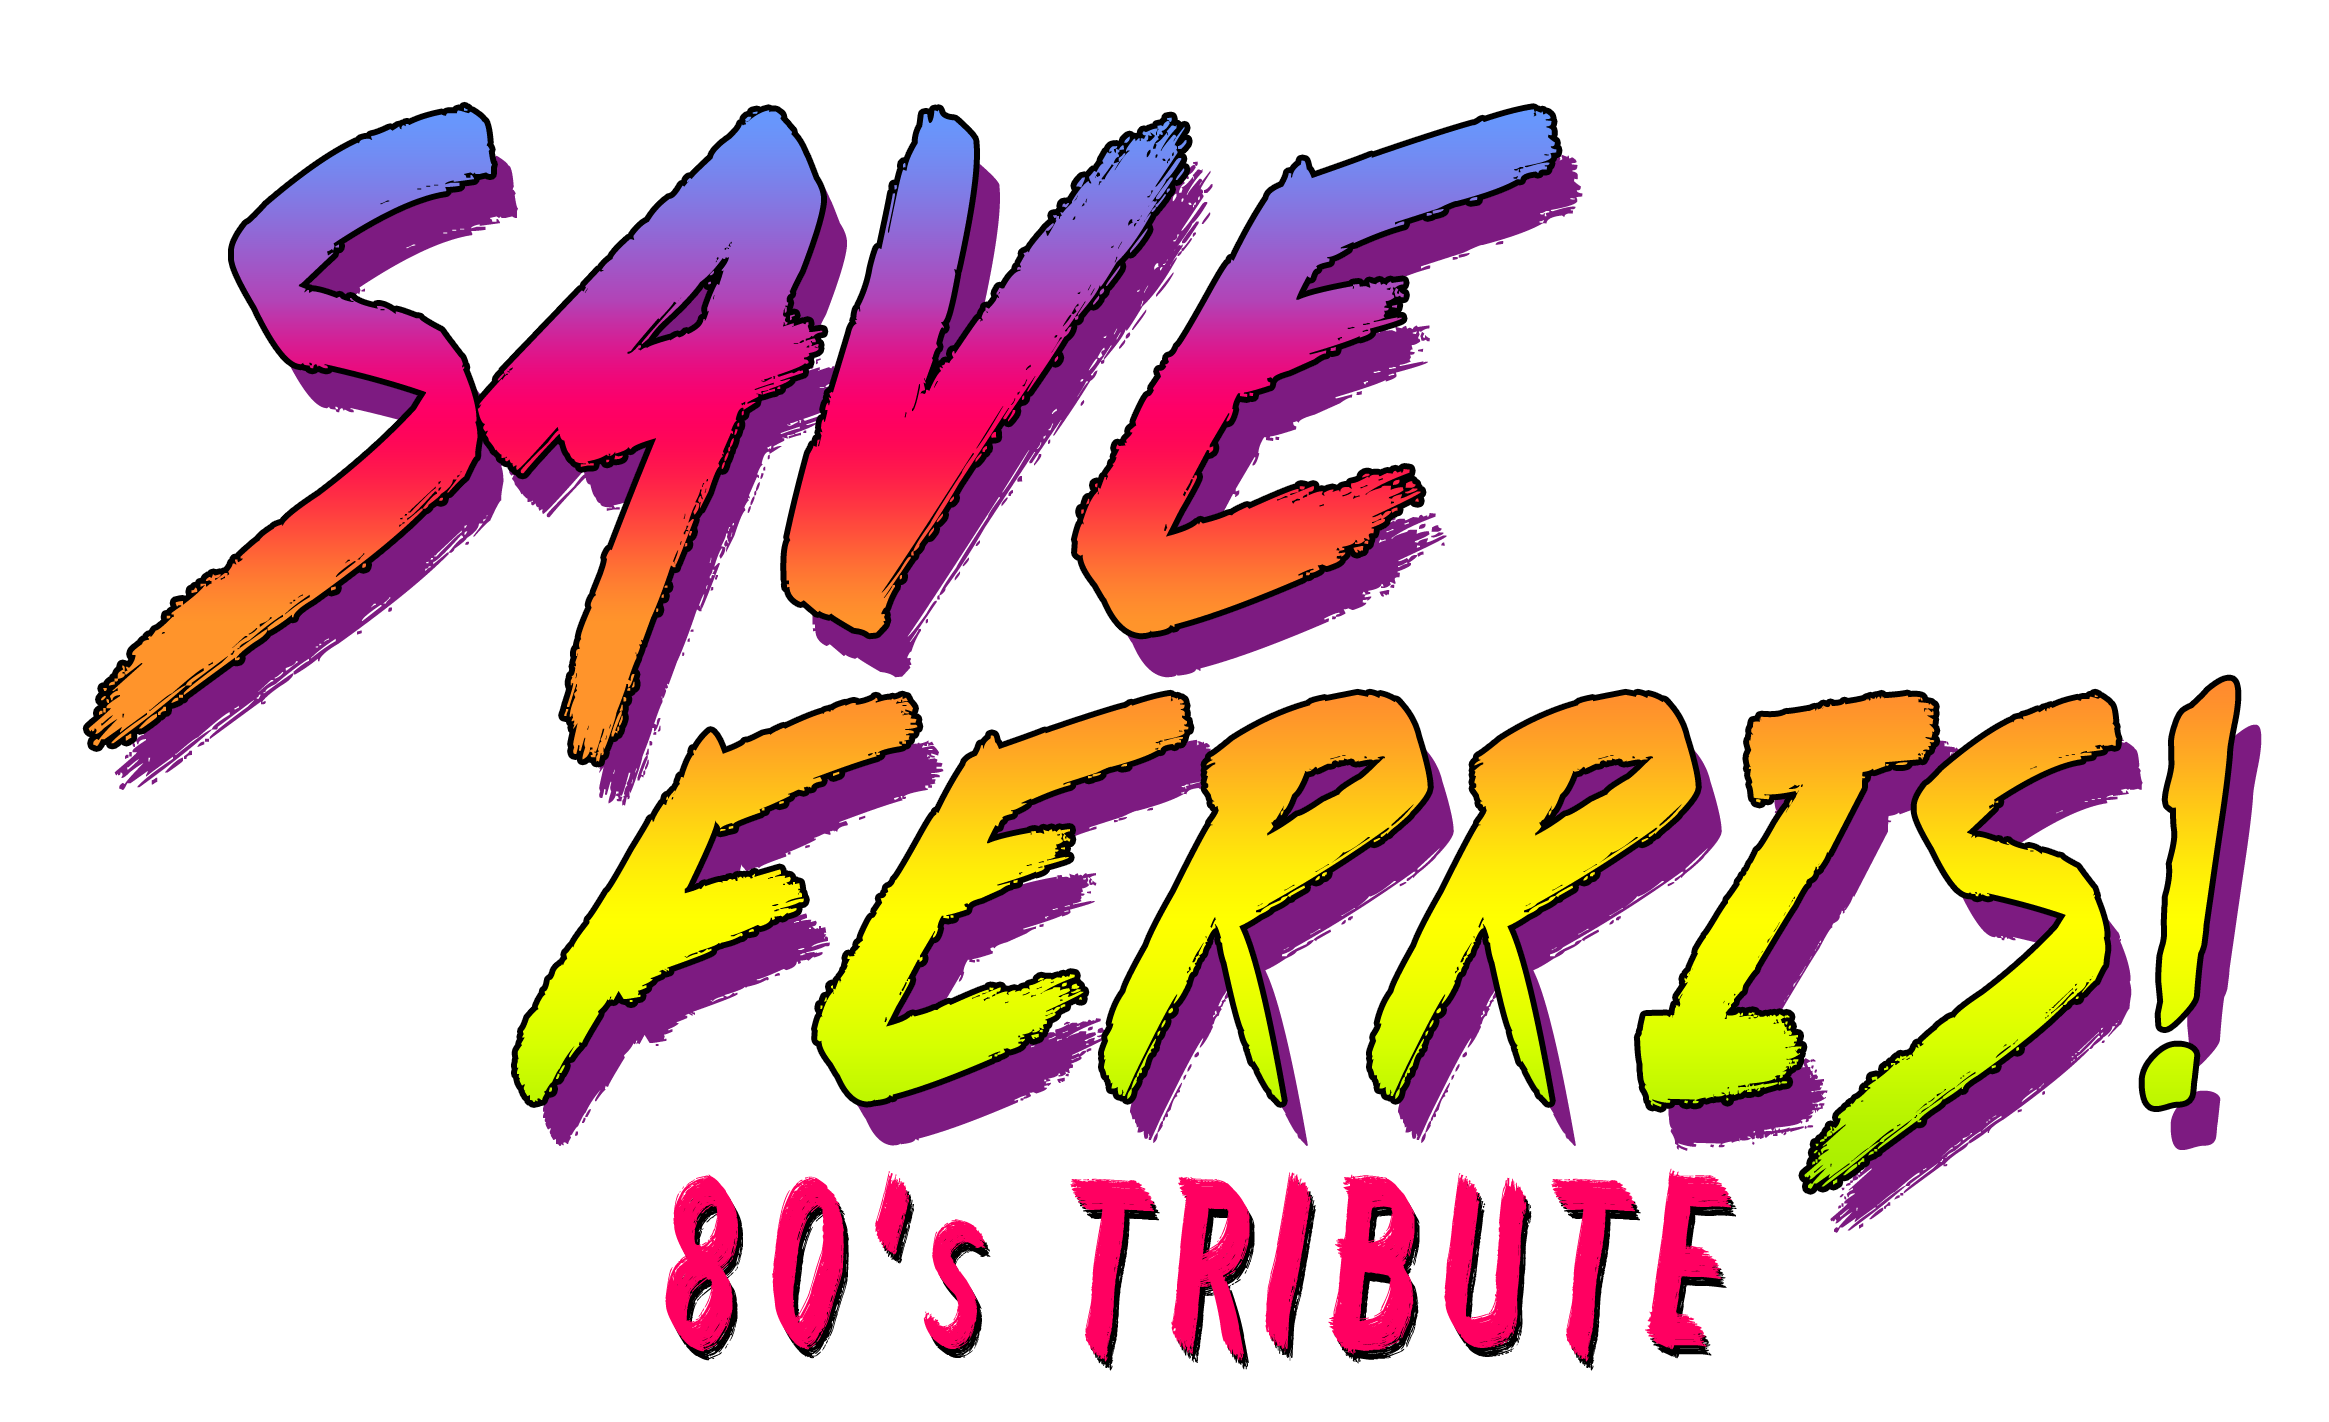 Save Ferris 80's Tribute